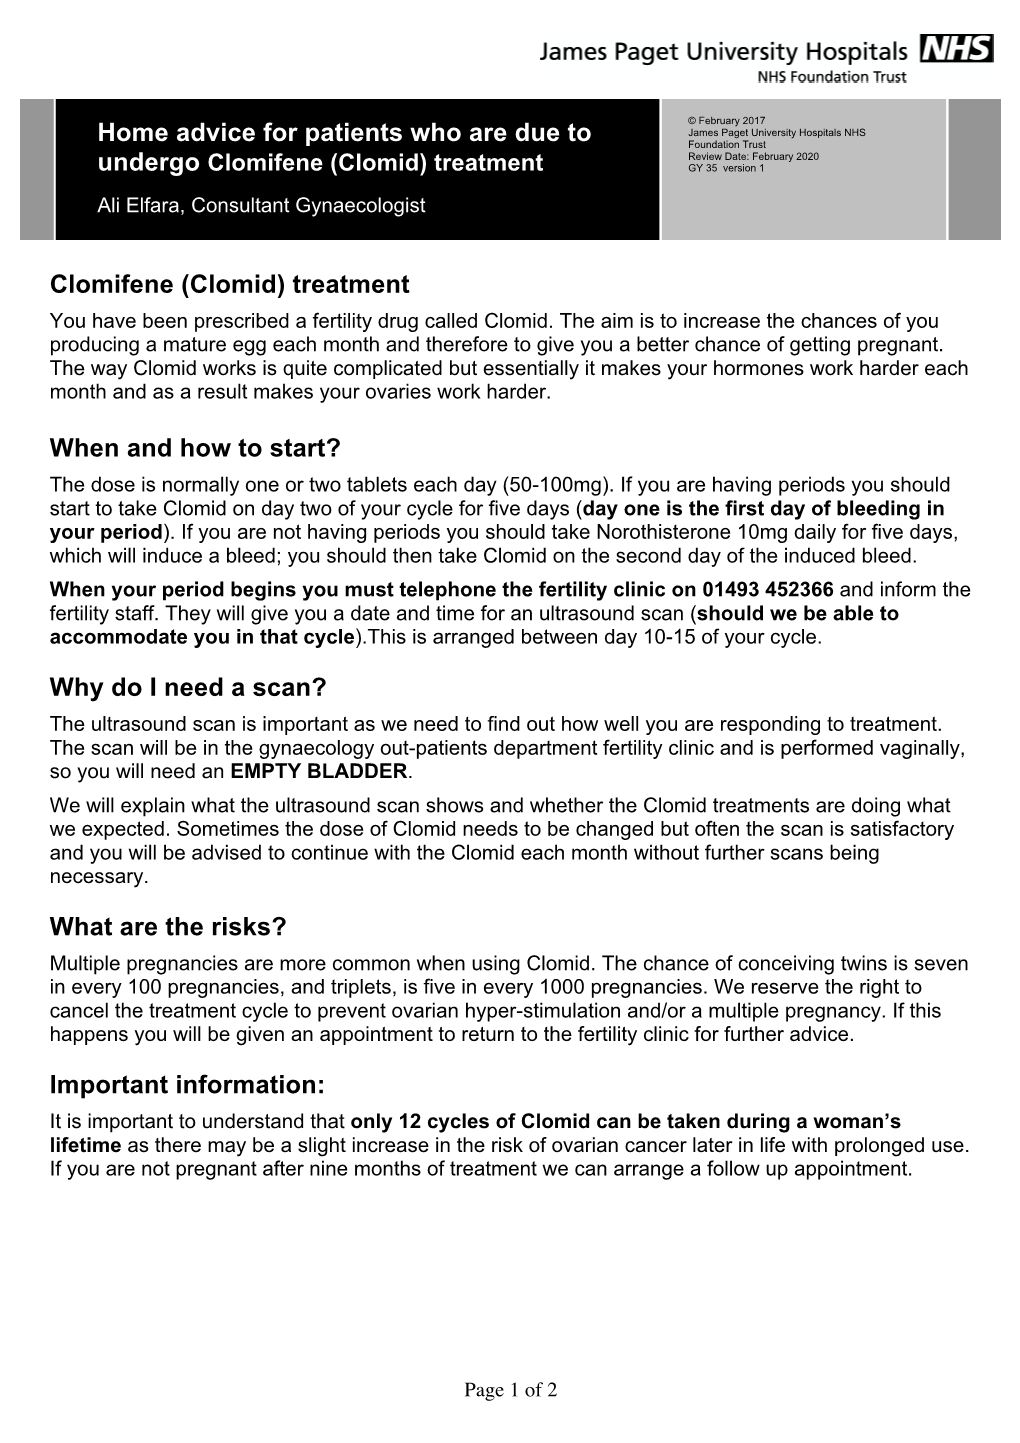 Clomid) Treatment GY 35 Version 1